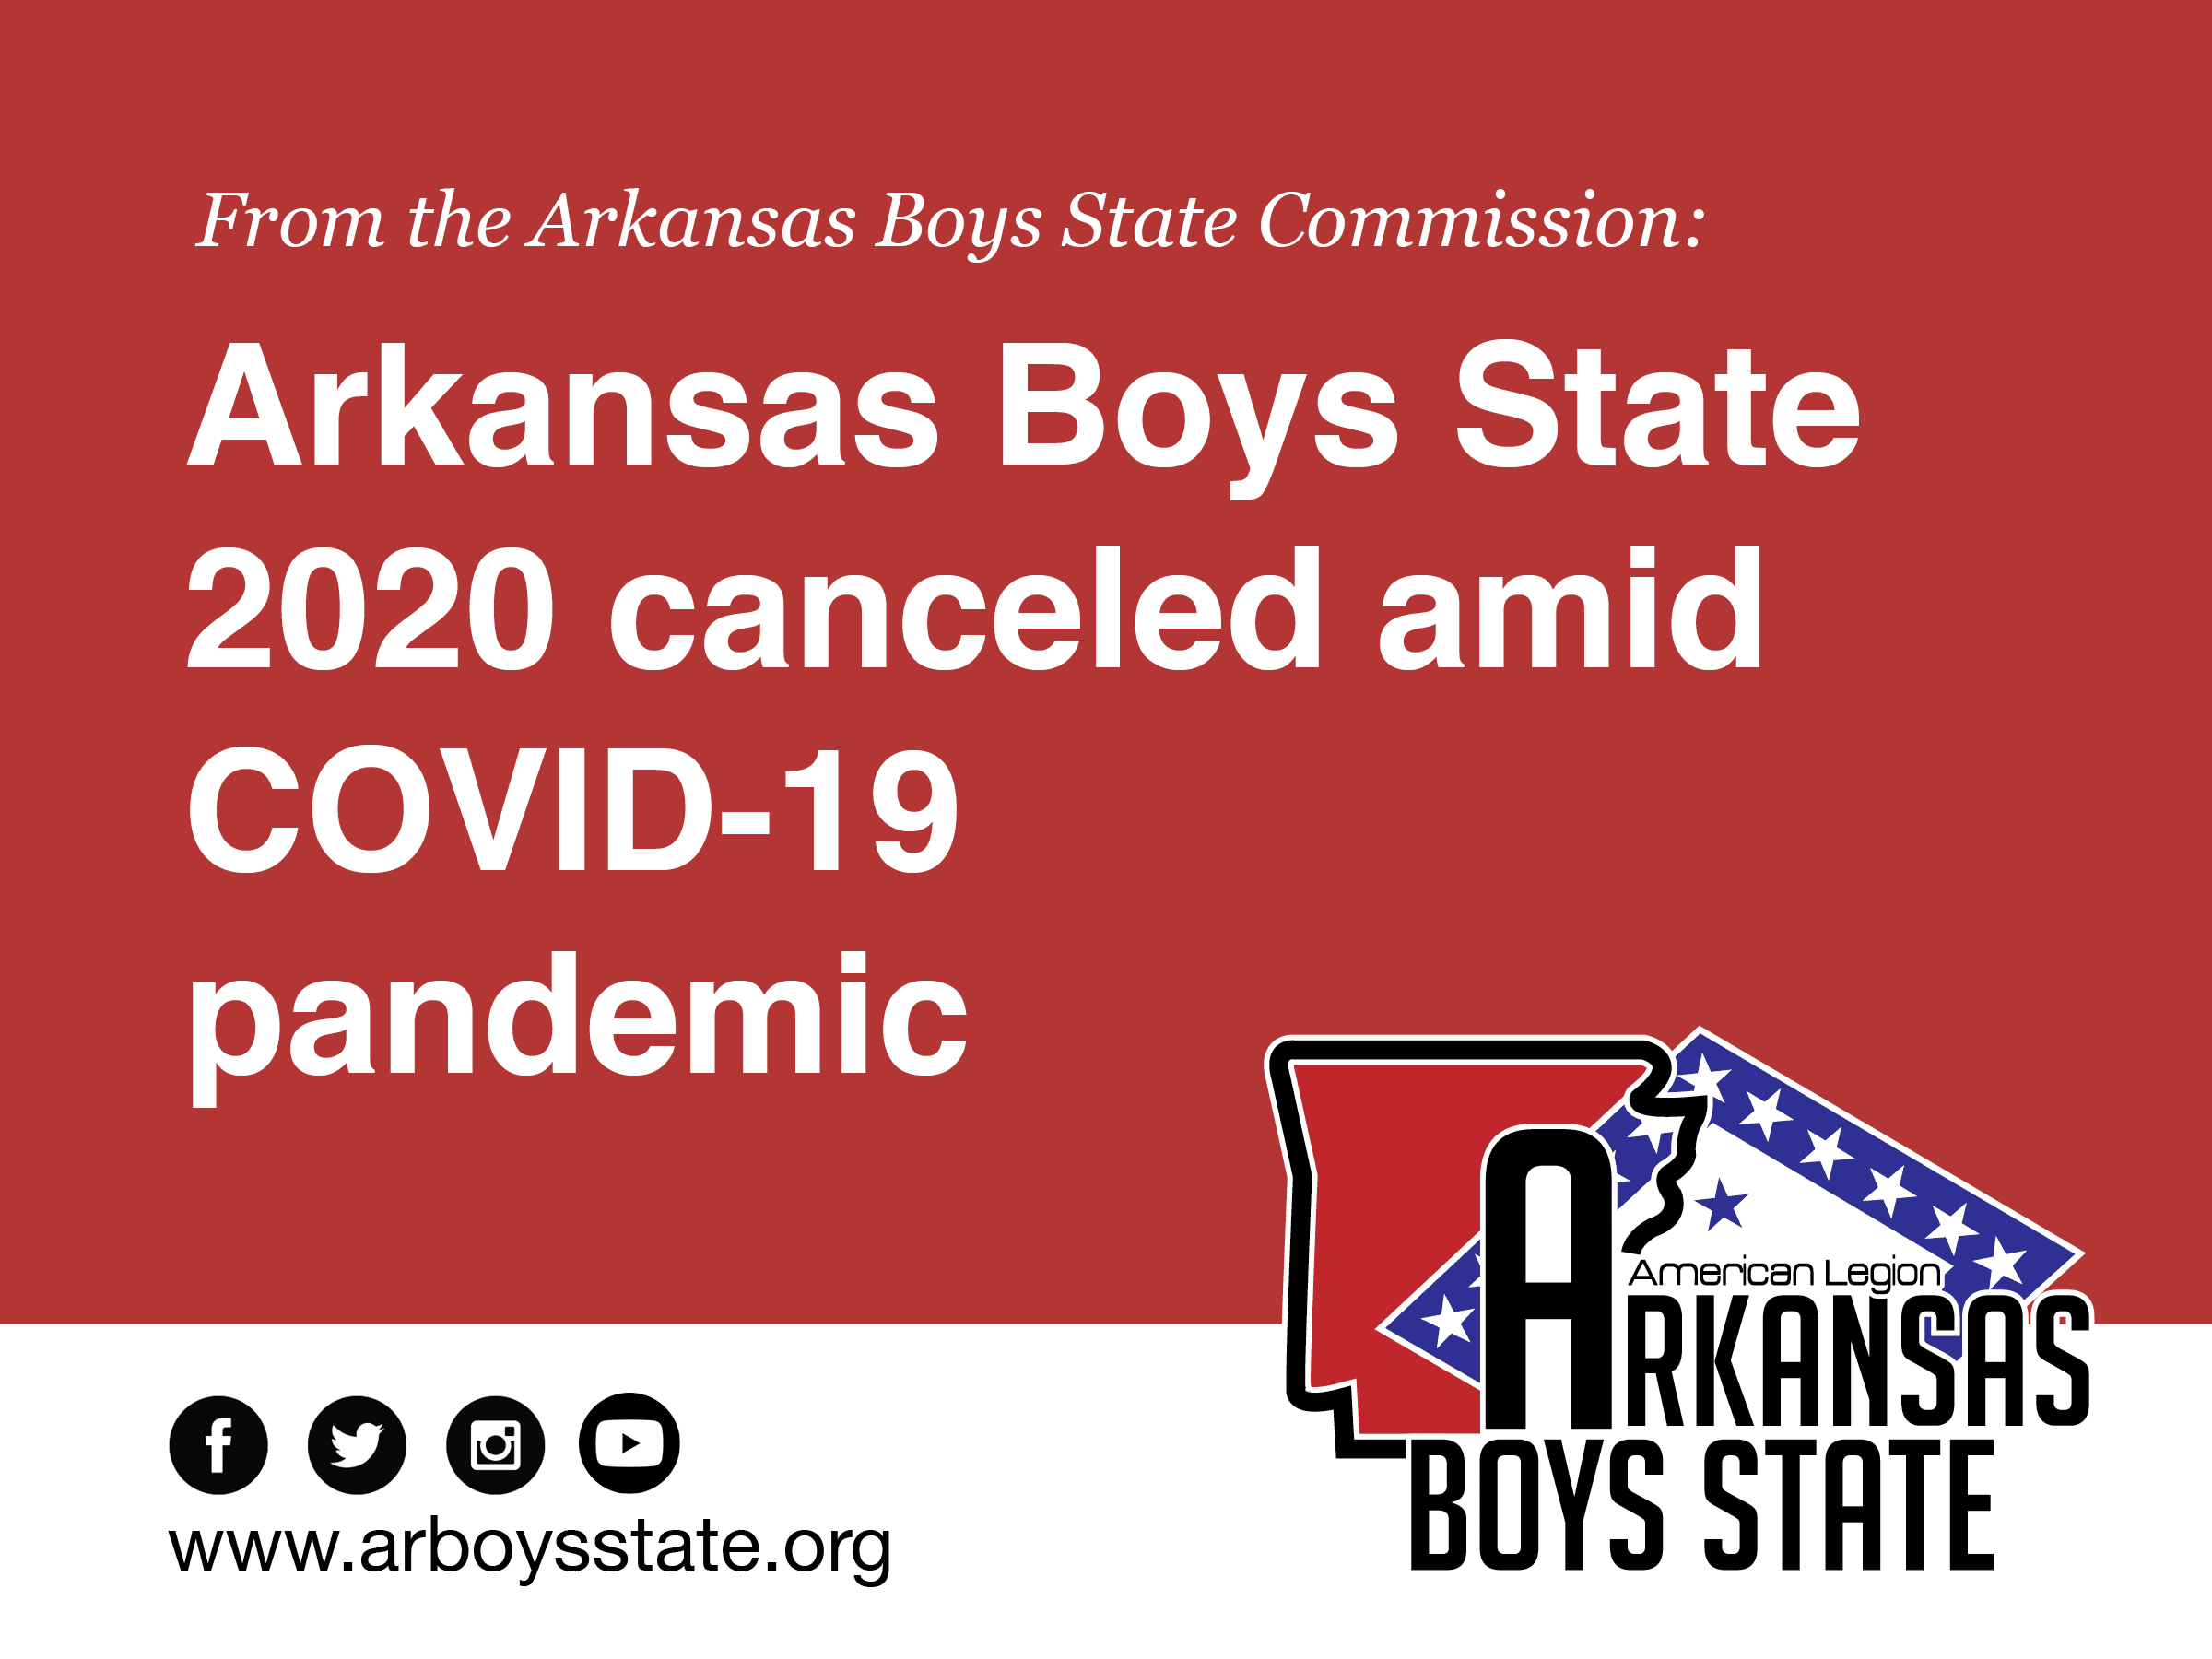 Arkansas Boys State 2020 canceled amid COVID-19 pandemic